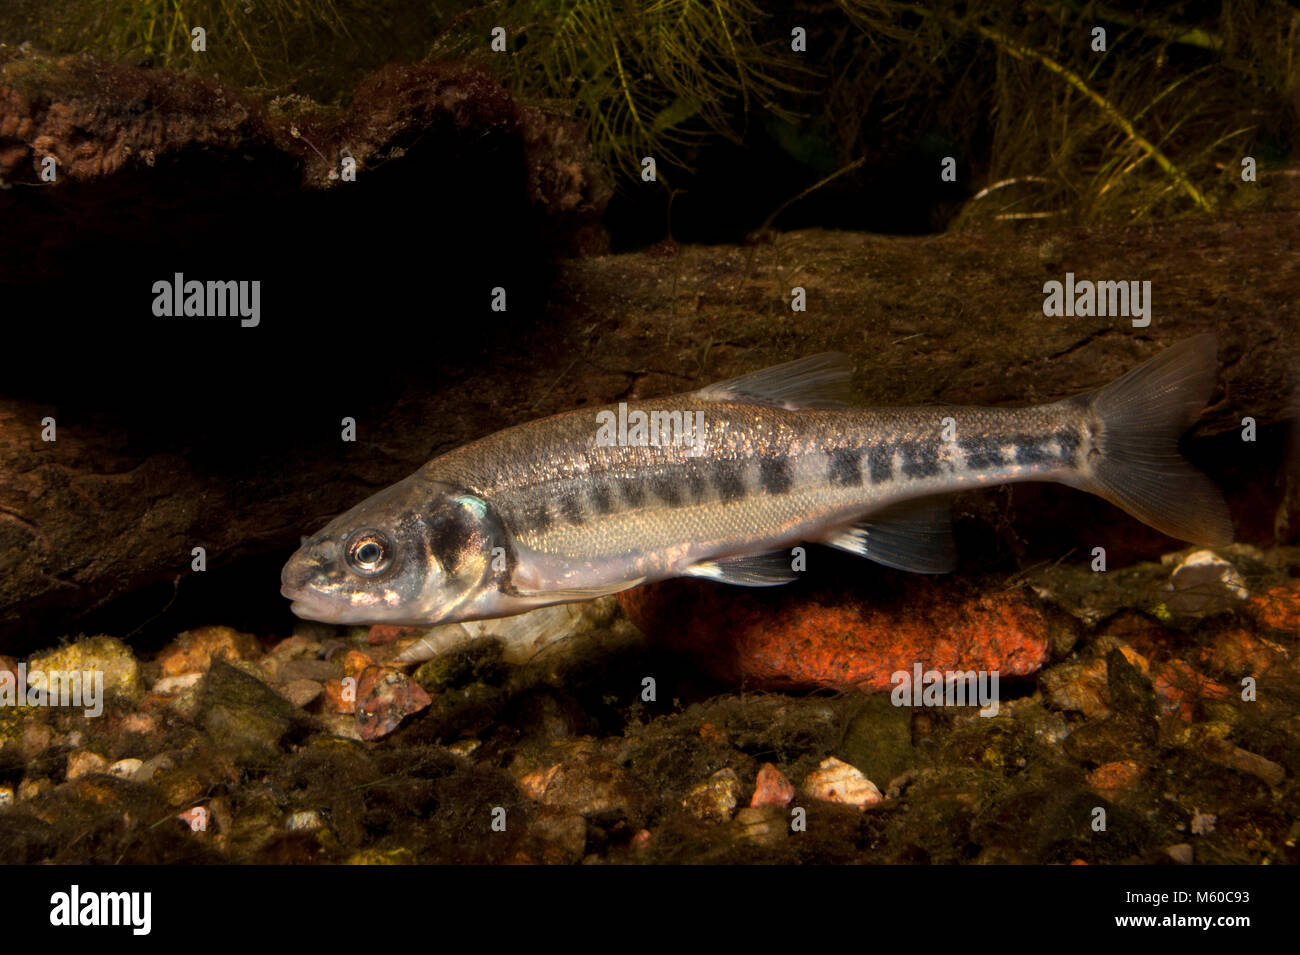 Minnow (Phoxinus phoxinus). Adult fish swimming under water. Germany Stock Photo